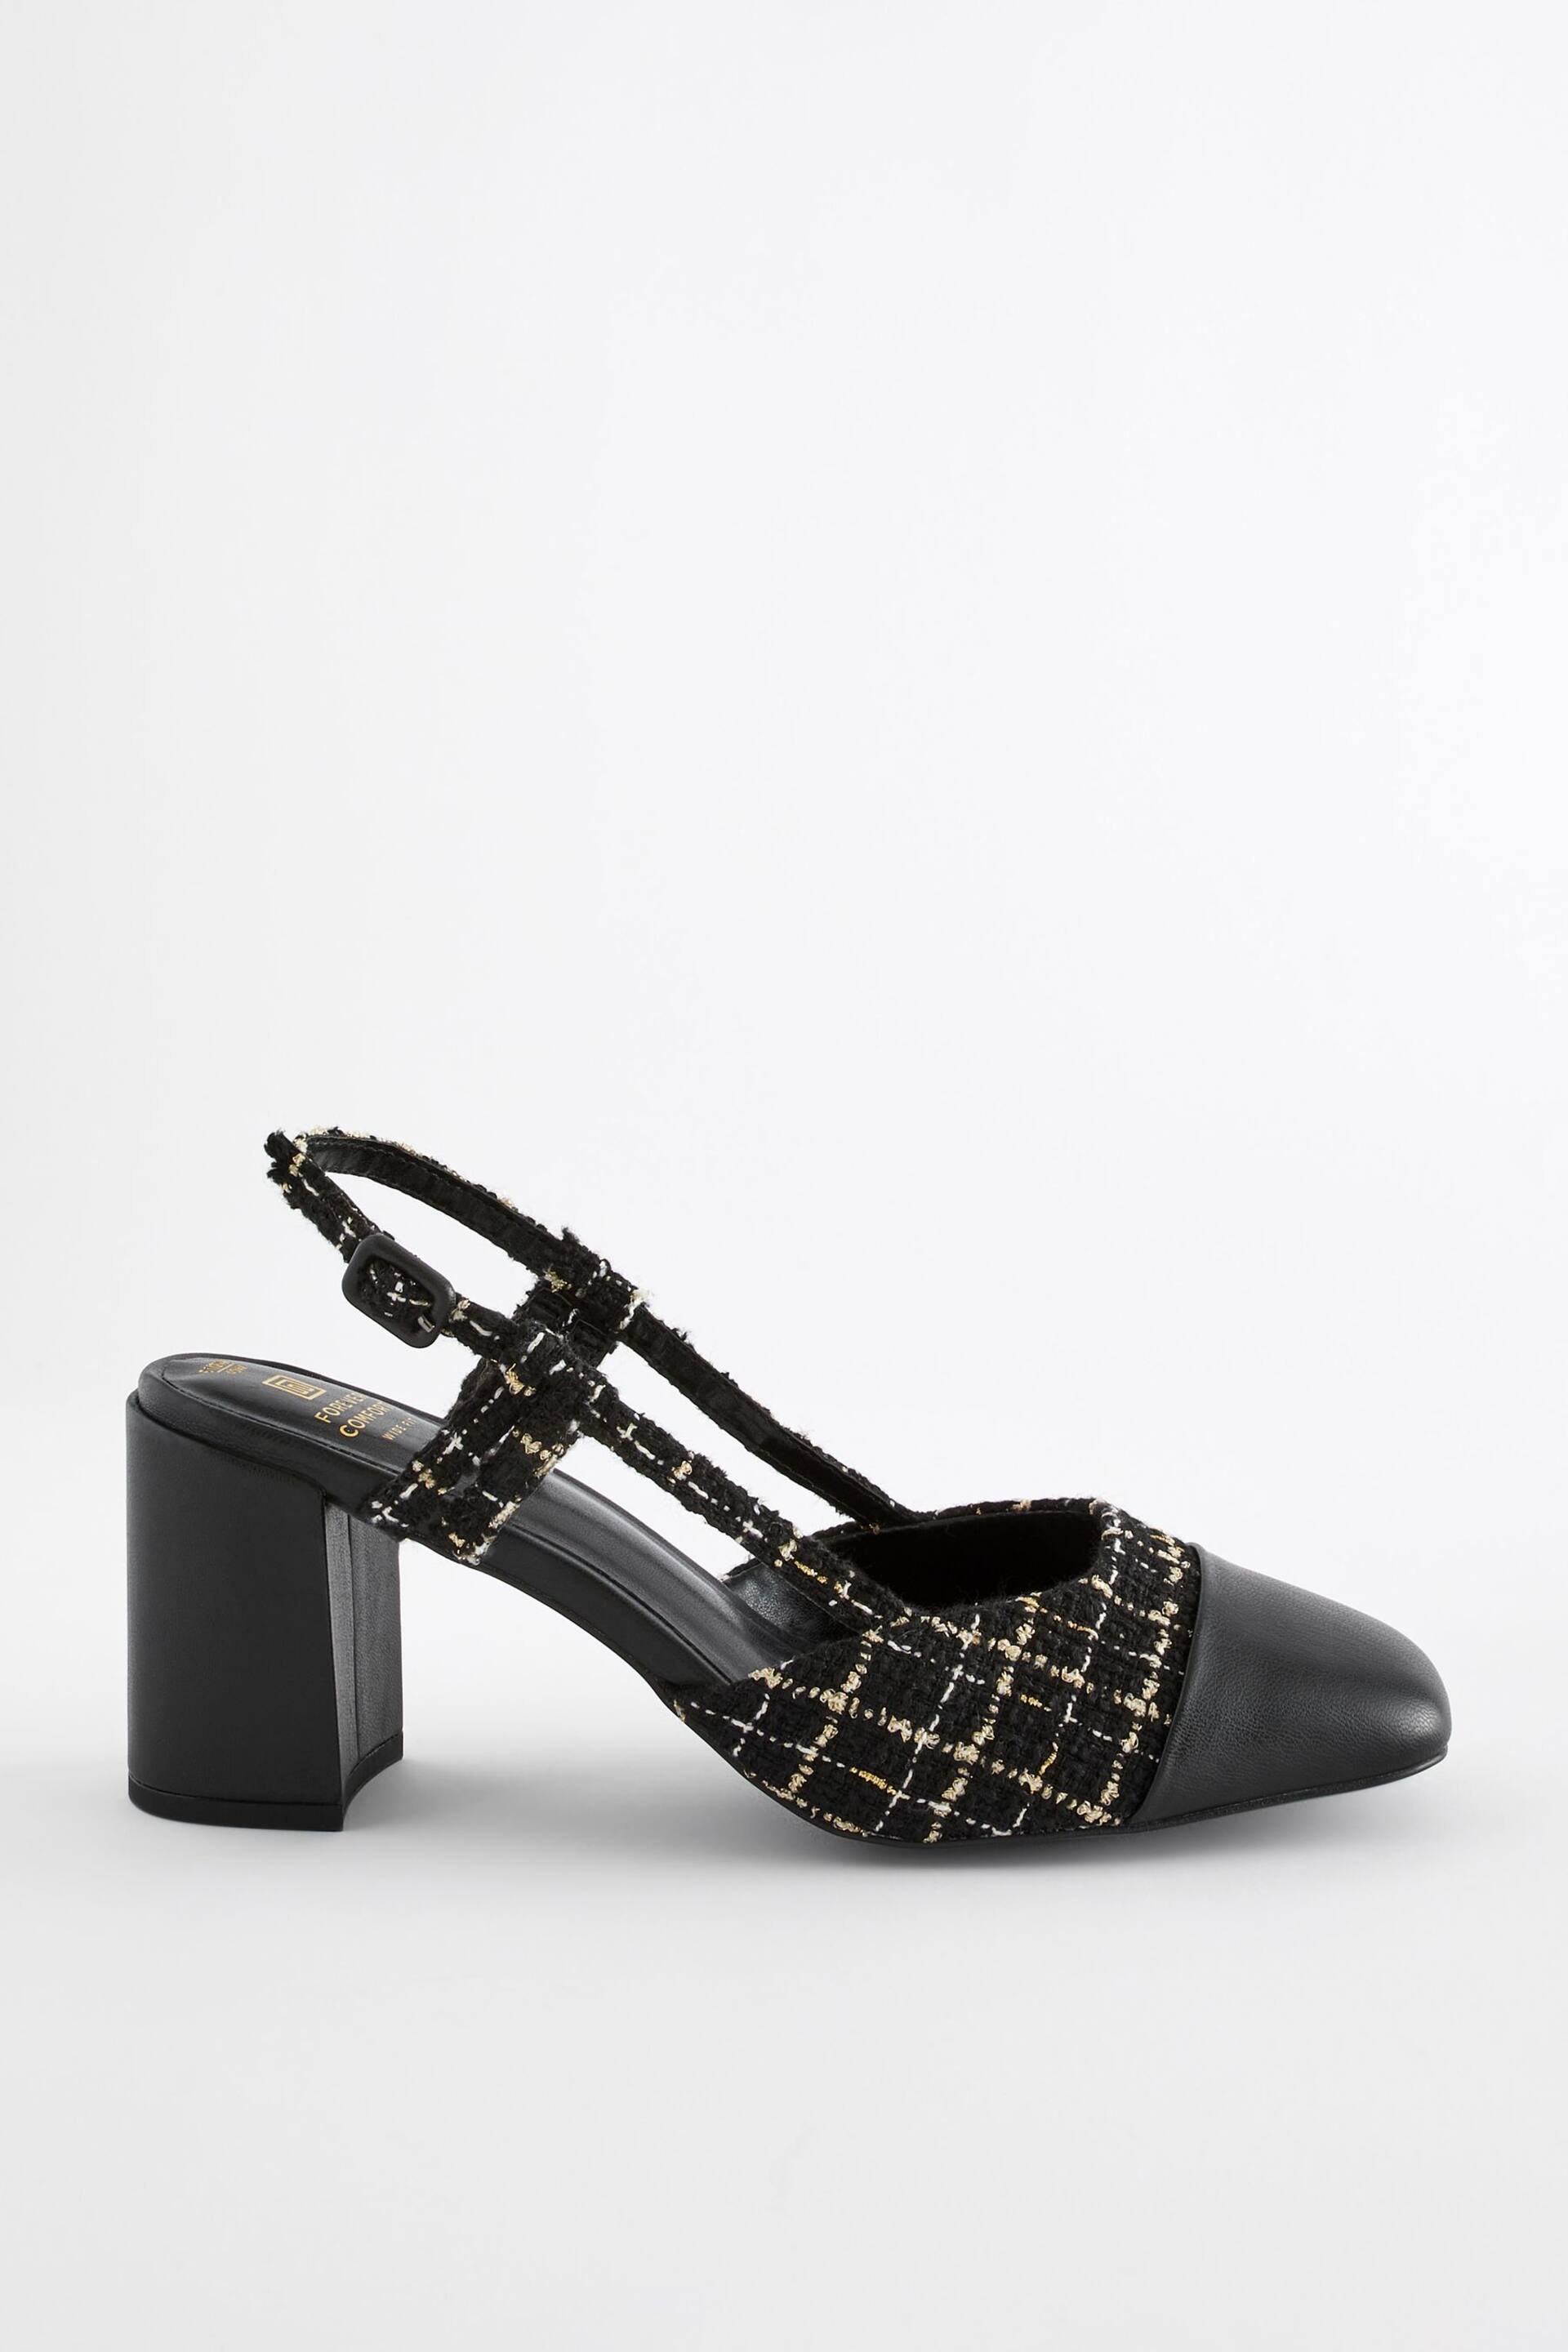 Monochrome Forever Comfort® Square Toe Slingback Block Heel Shoes - Image 7 of 12